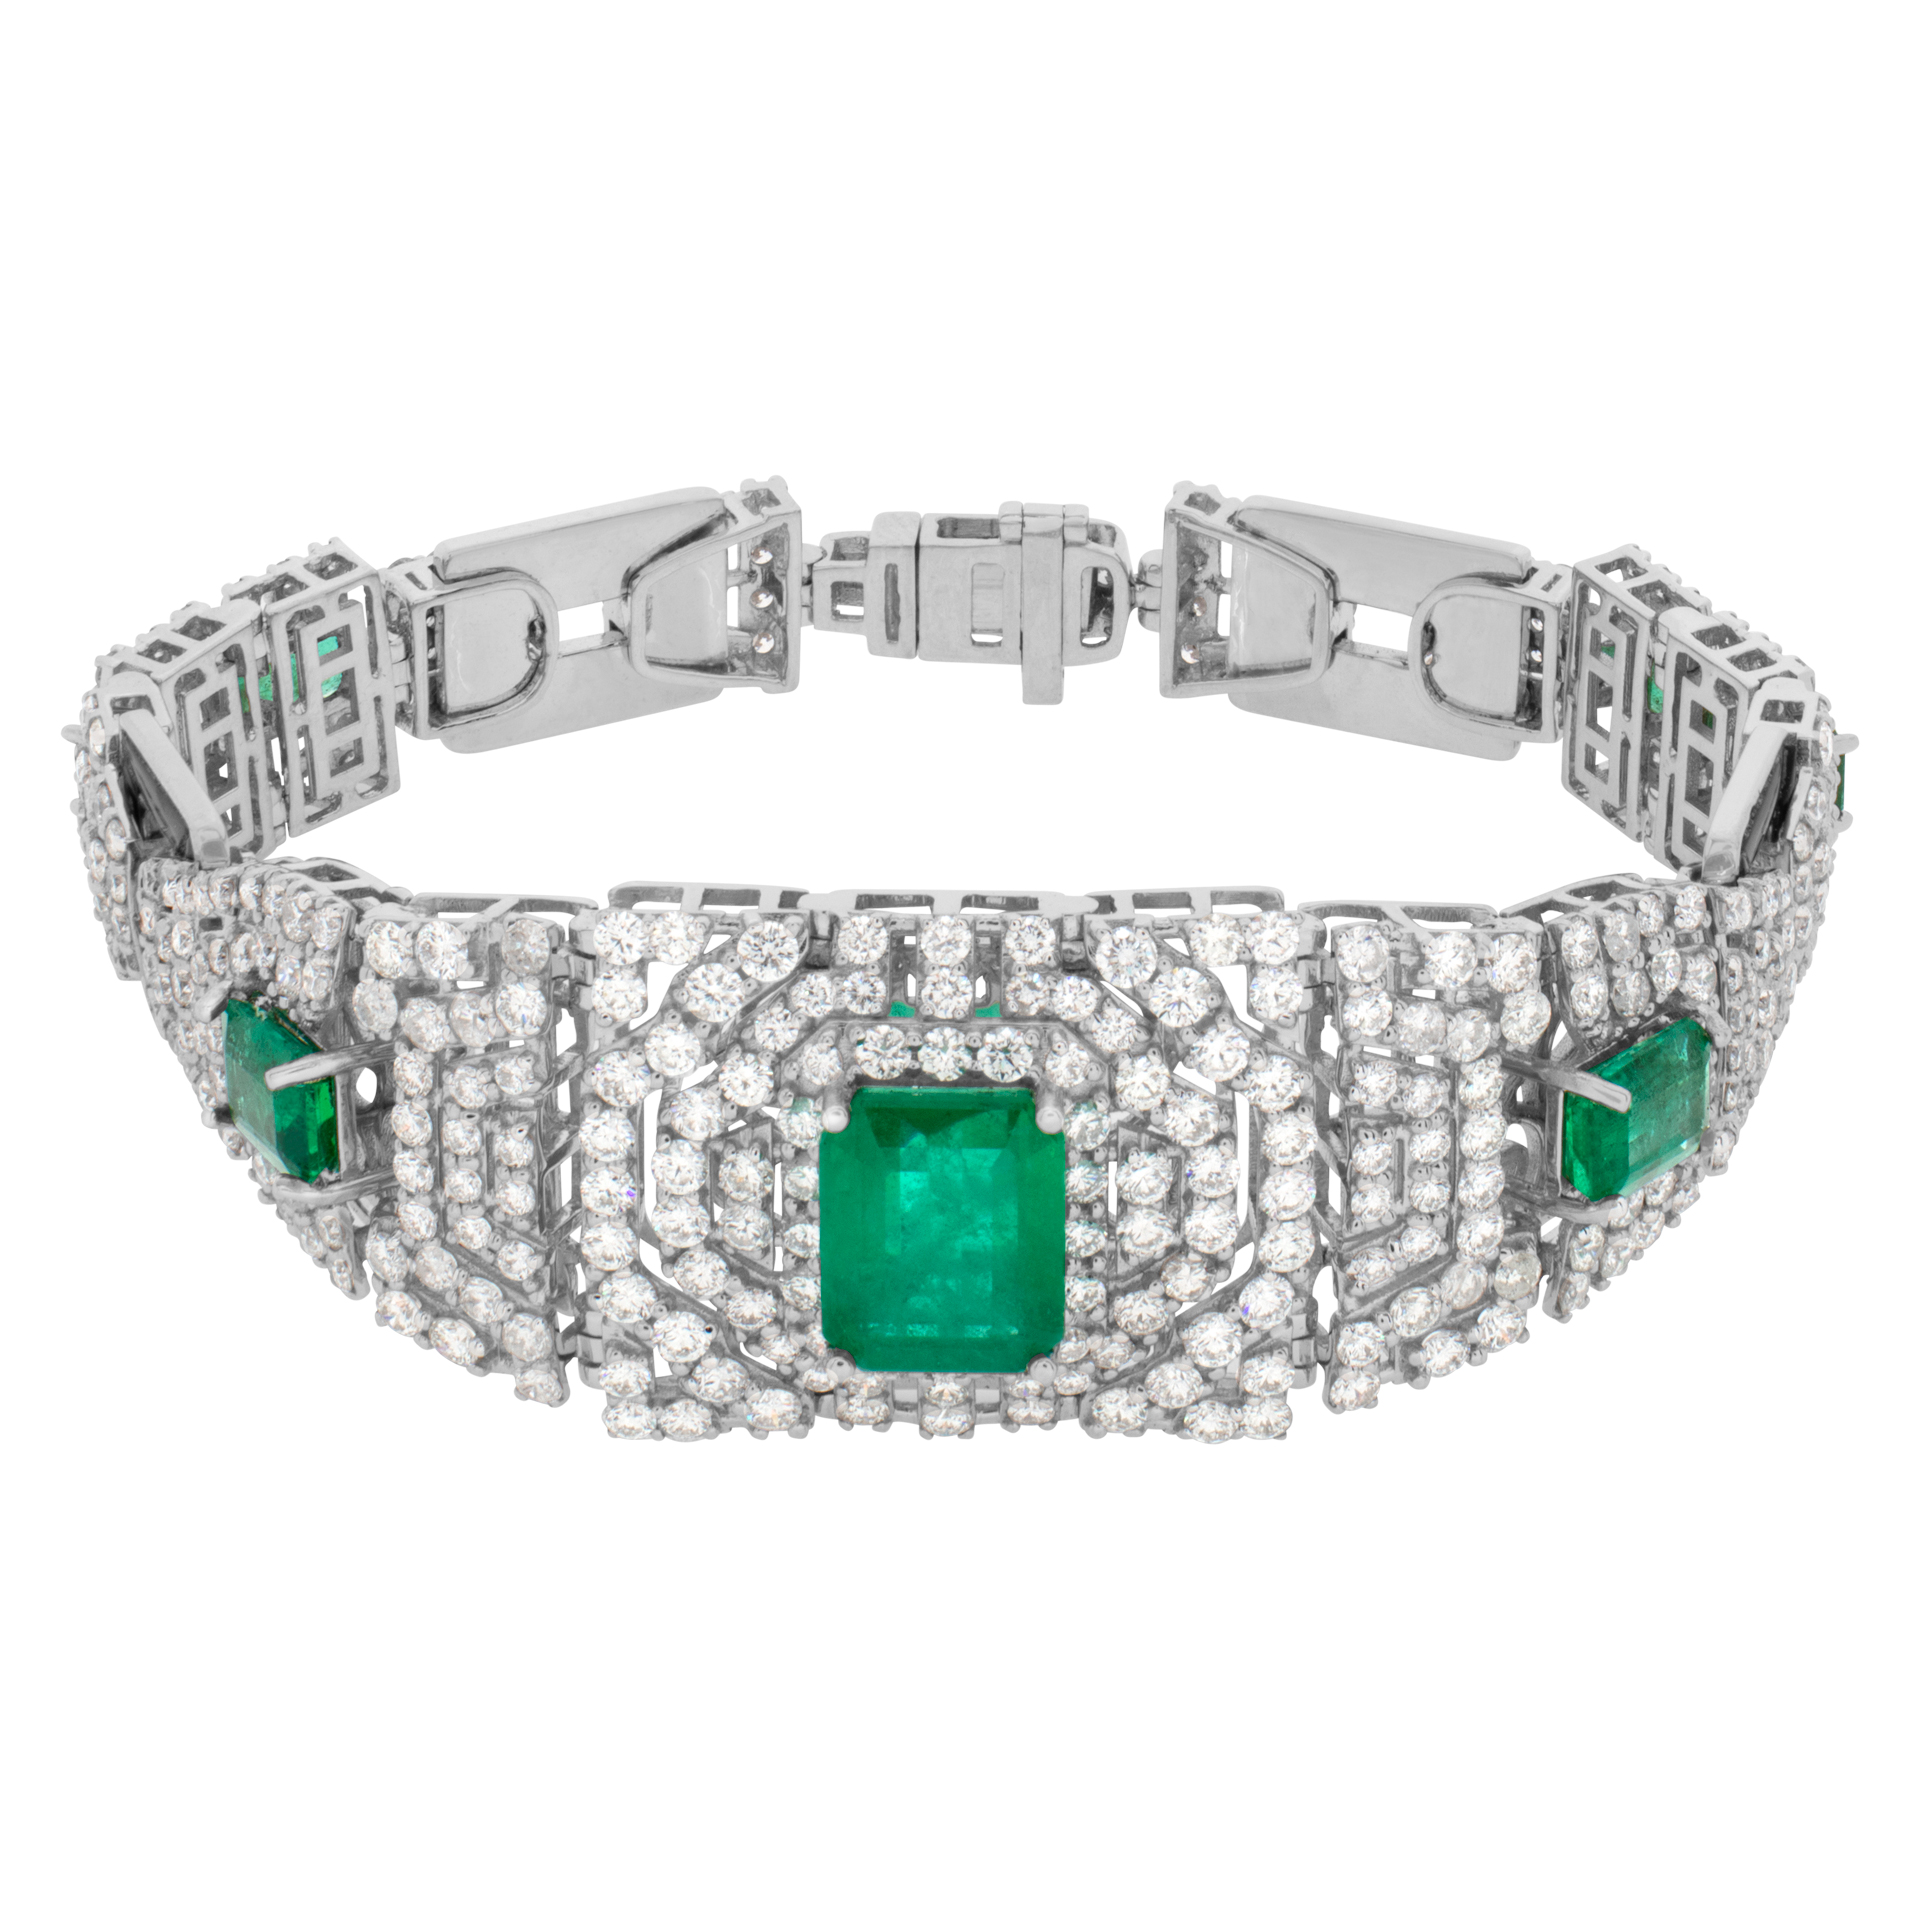 Emerald and diamond bracelet in 18k white gold